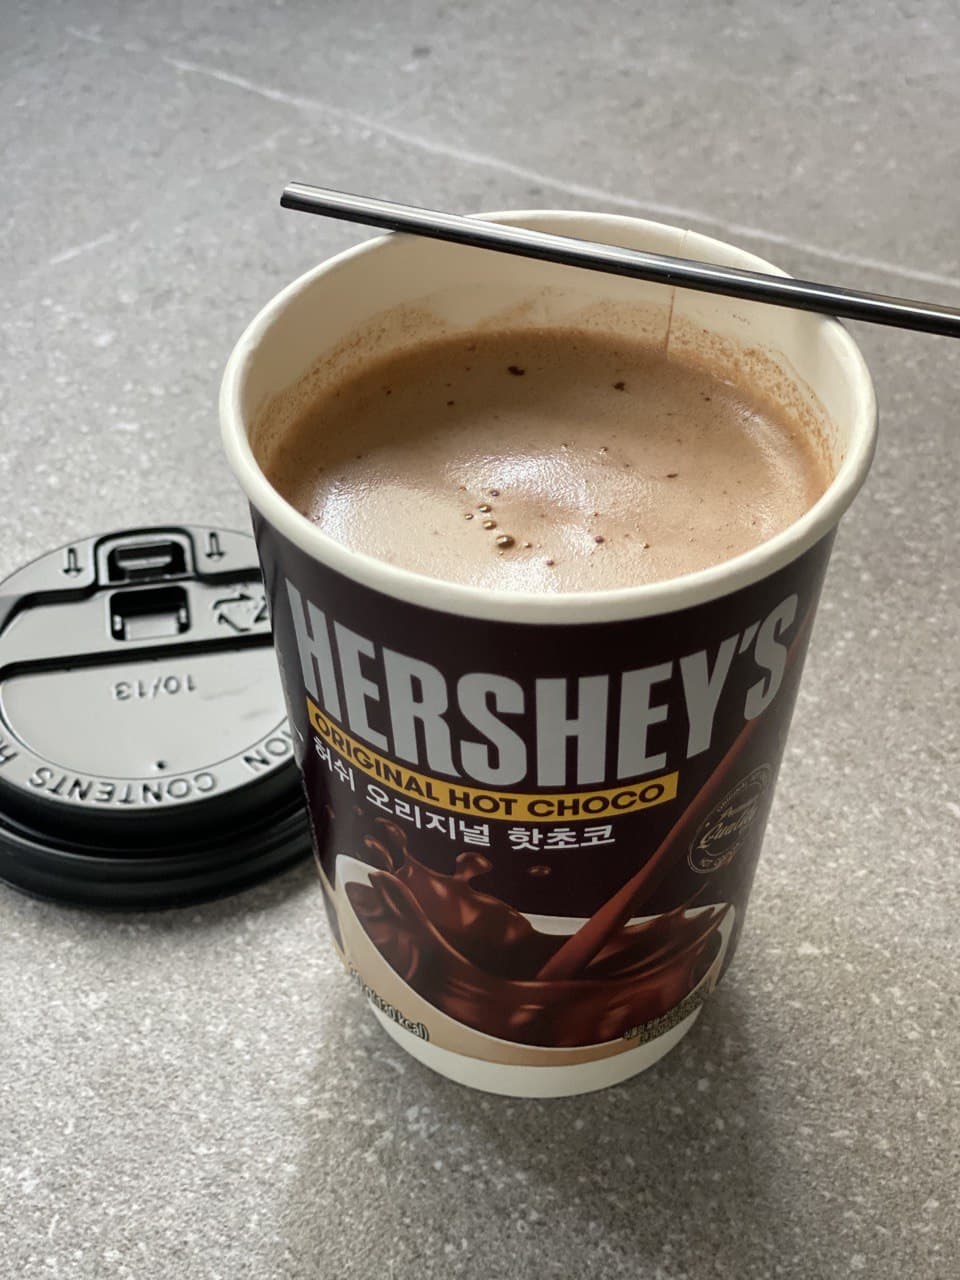 Hershey's Original Hot Chocolate Cup 30g (unit)